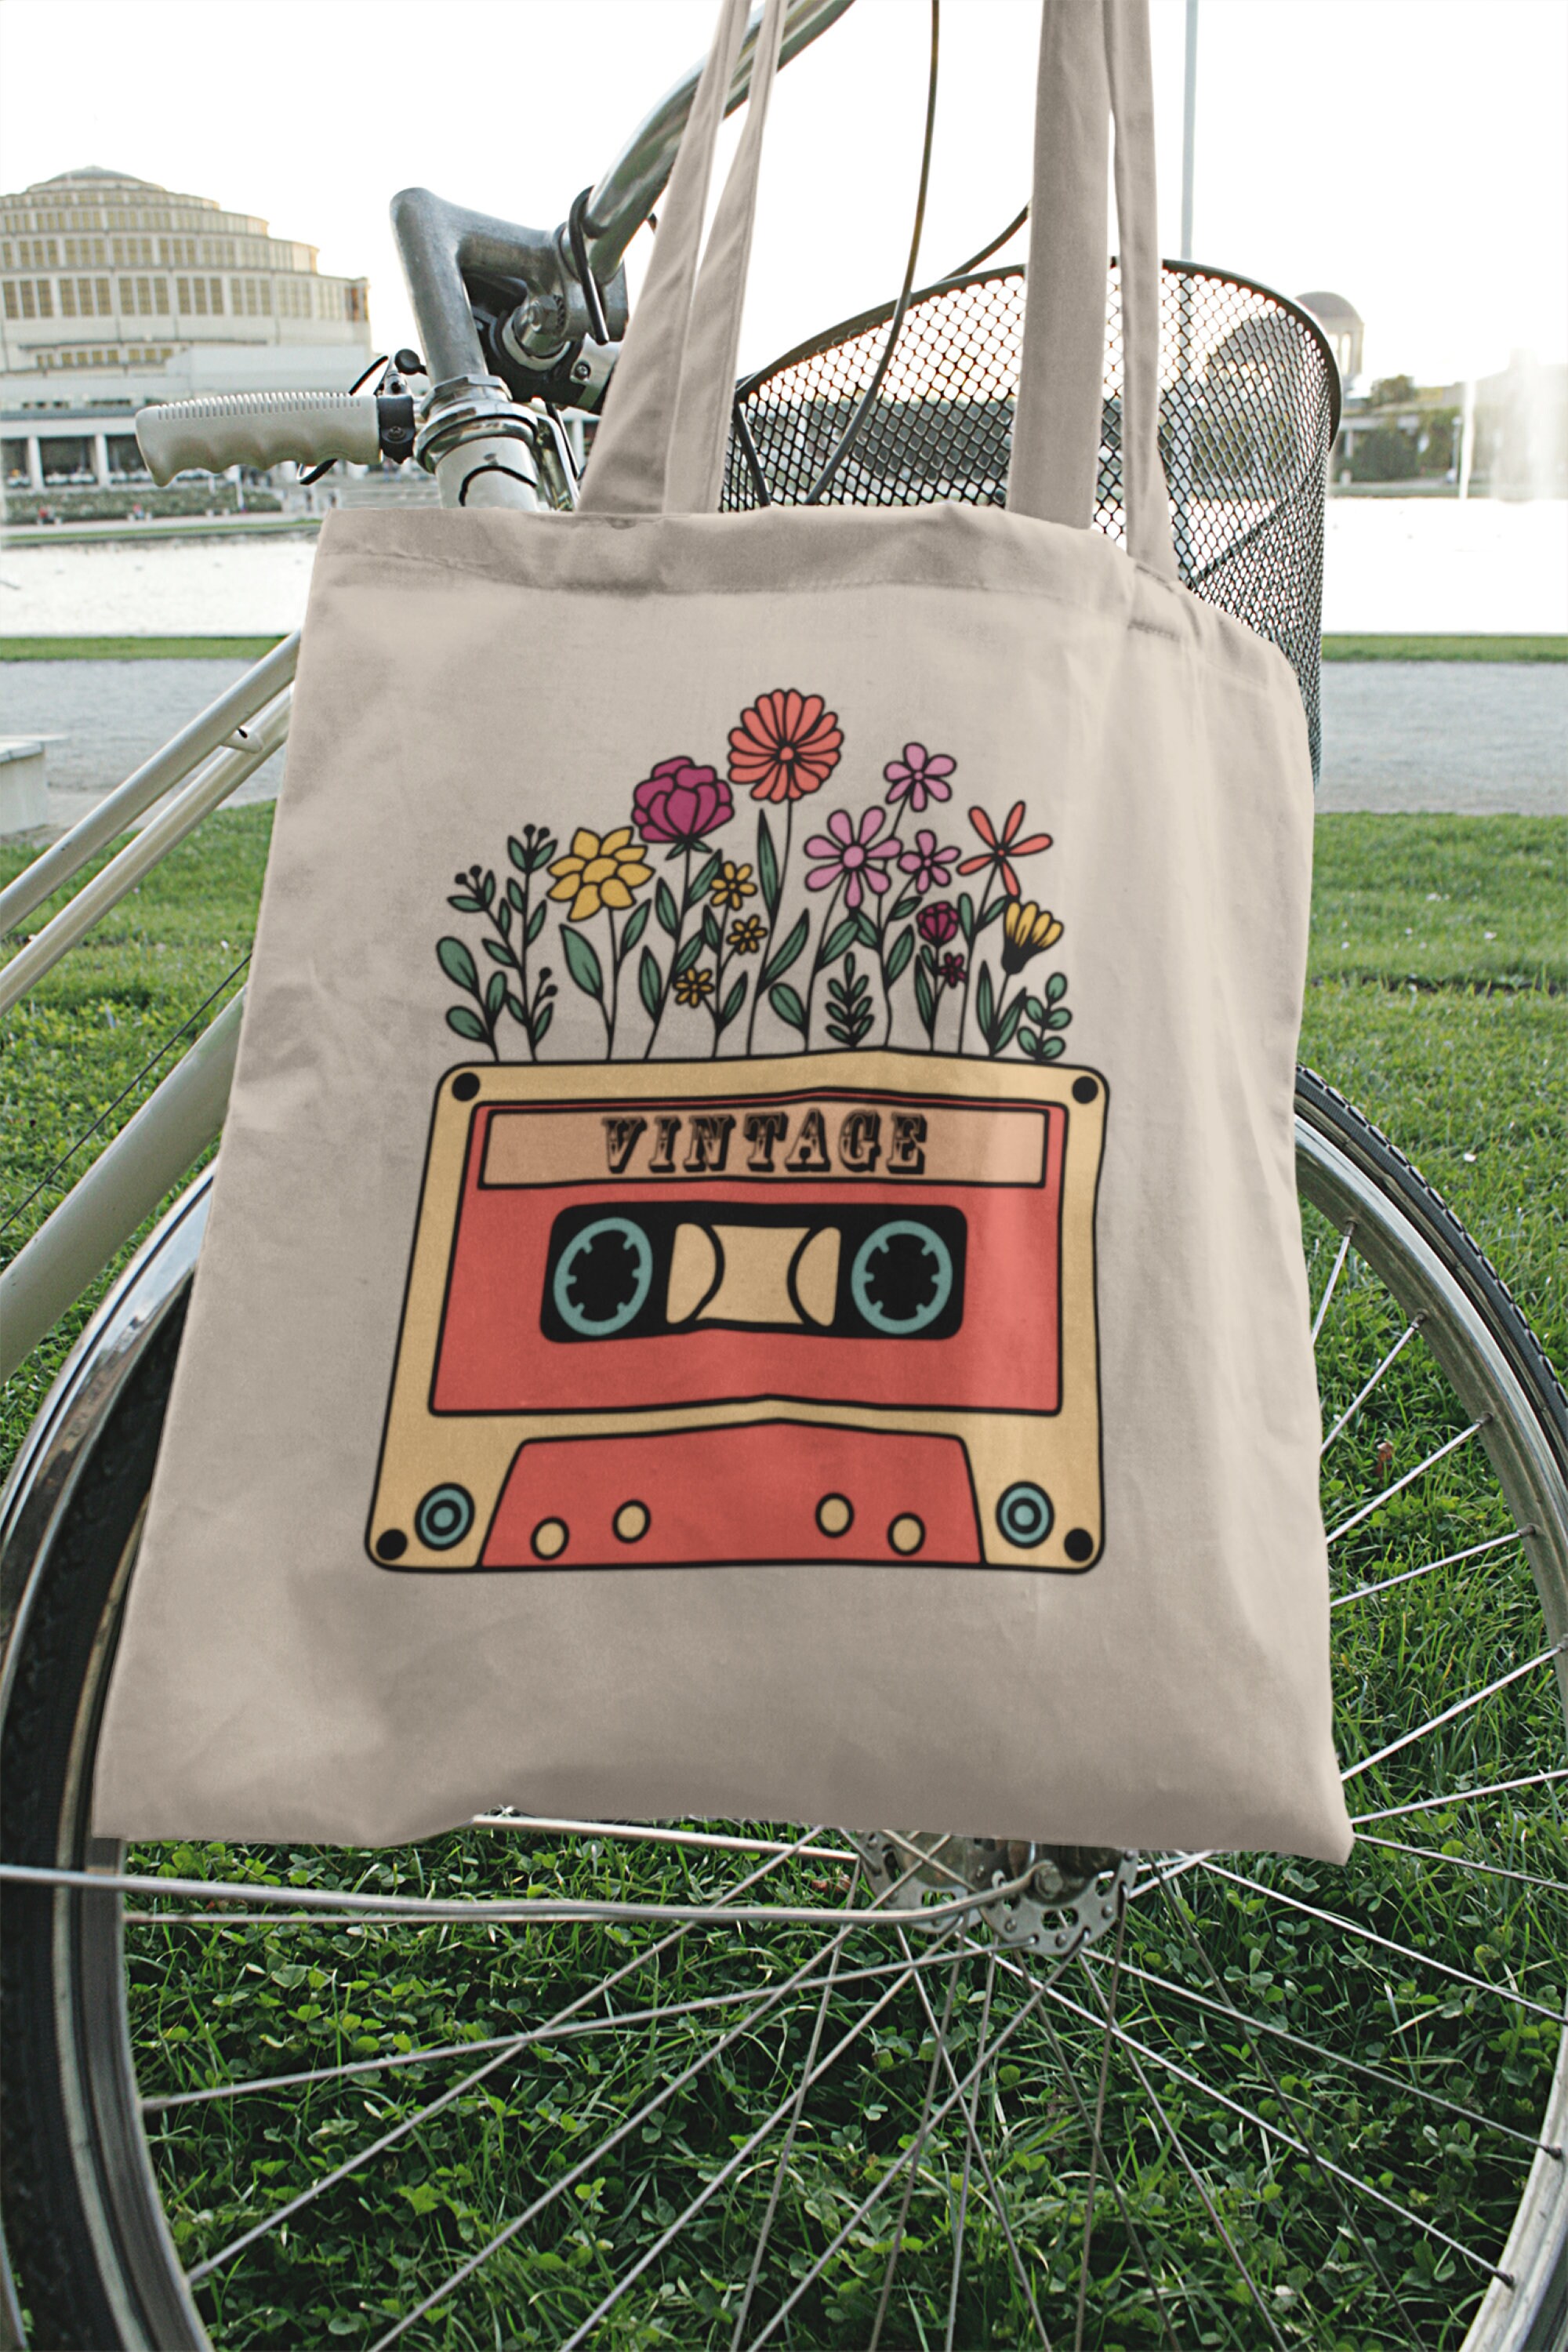 Bike Canvas Tote Bag Vintage Bike Tote Bag Boho Tote Bag Sustainable Bag  Shopping Bag School Bag Gift Bag 